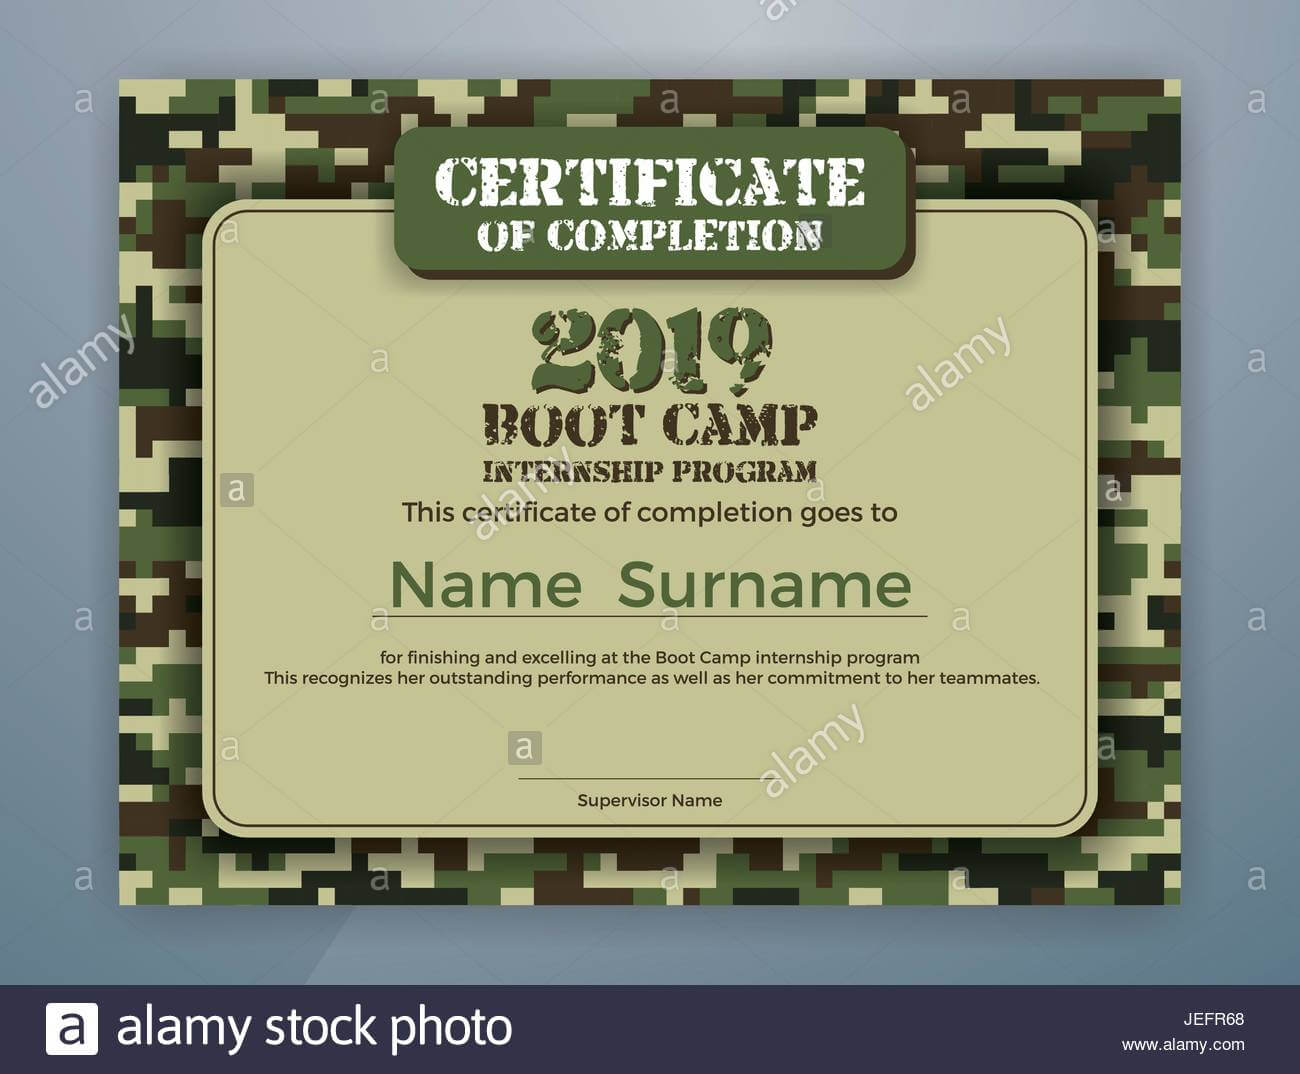 Boot Camp Internship Program Certificate Template Design Pertaining To Boot Camp Certificate Template